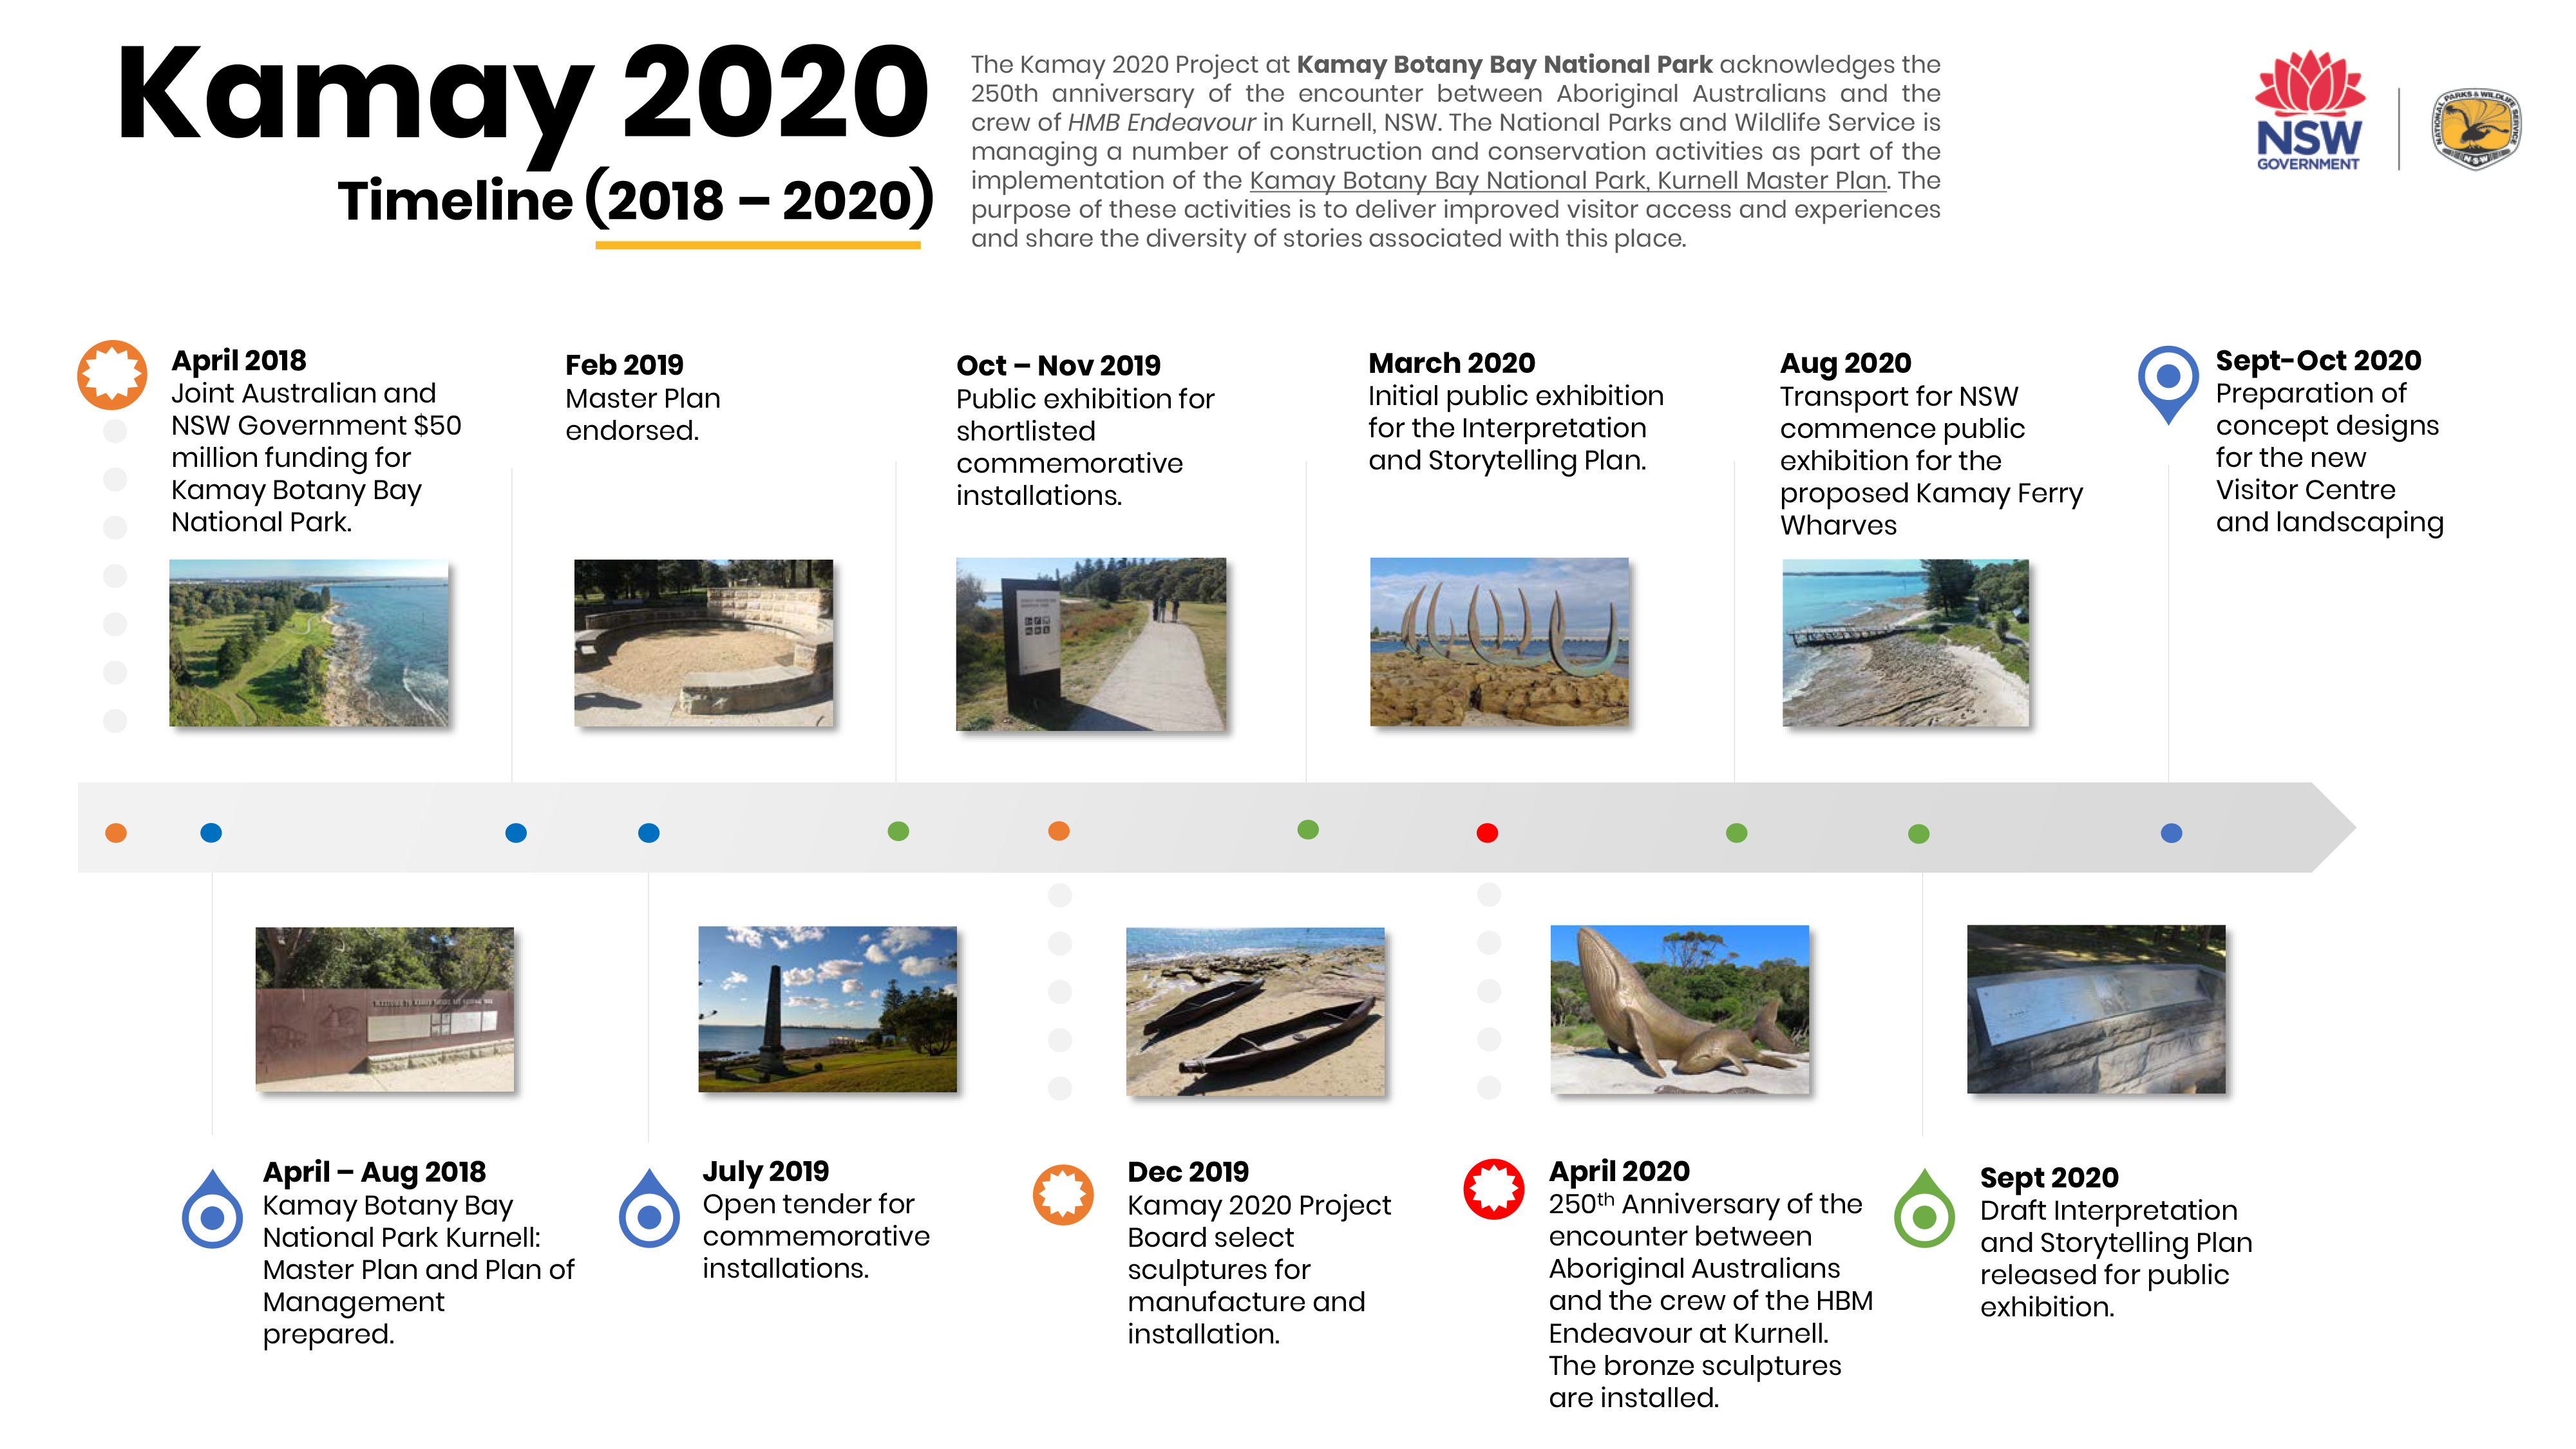 Kamay 2020 project timeline (2018-2020)